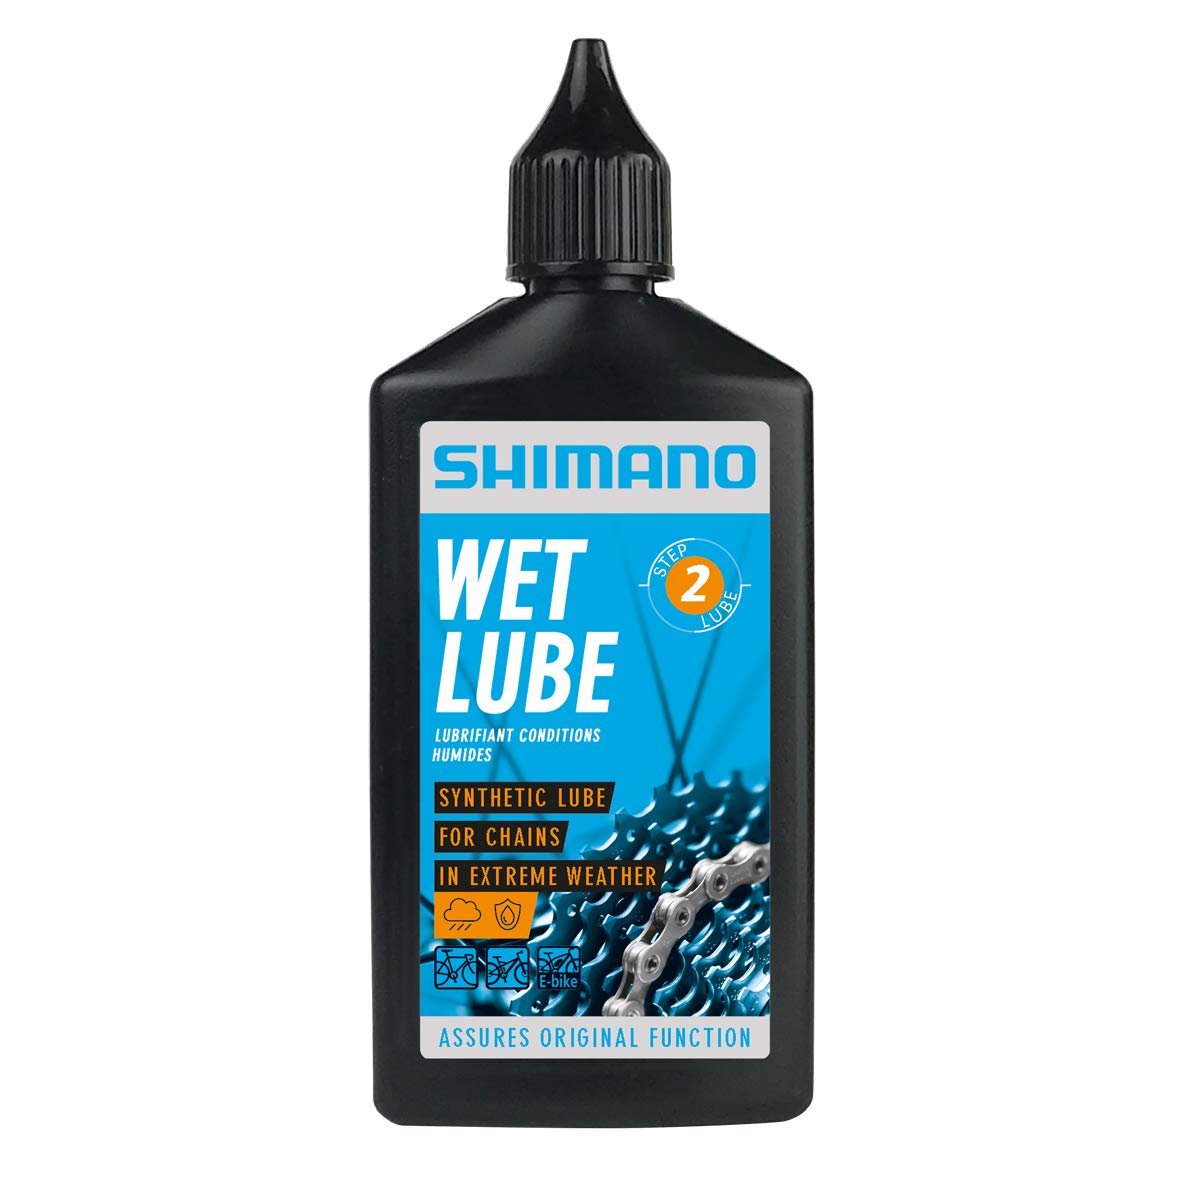 Смазка Shimano Wet Lube, для цепи, для влажной погоды, флакон, 100 мл, LBWL1B0100SA смазка muc off wet lube для цепи 120 мл 967